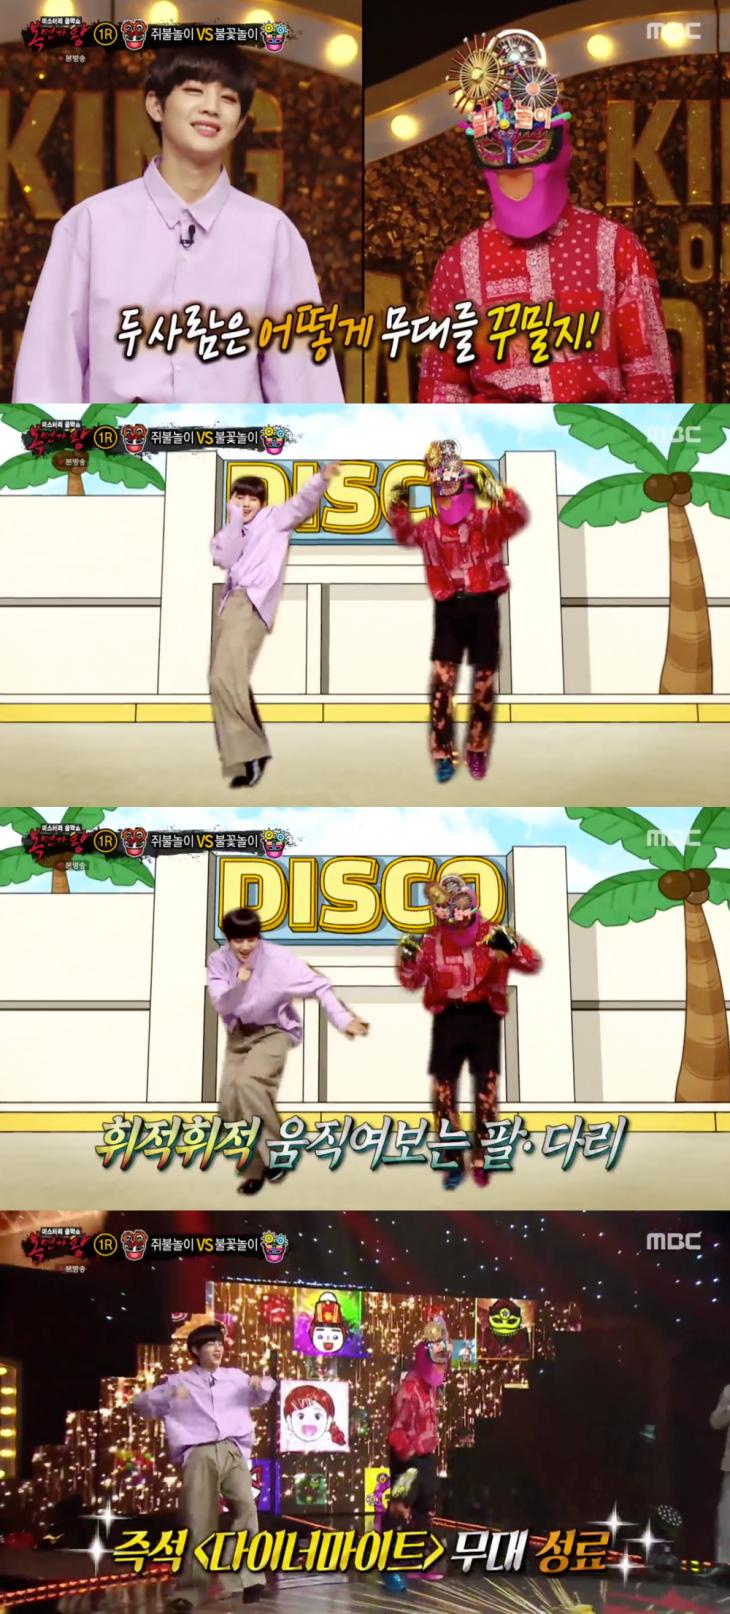 MBC '복면가왕' 방송 캡처